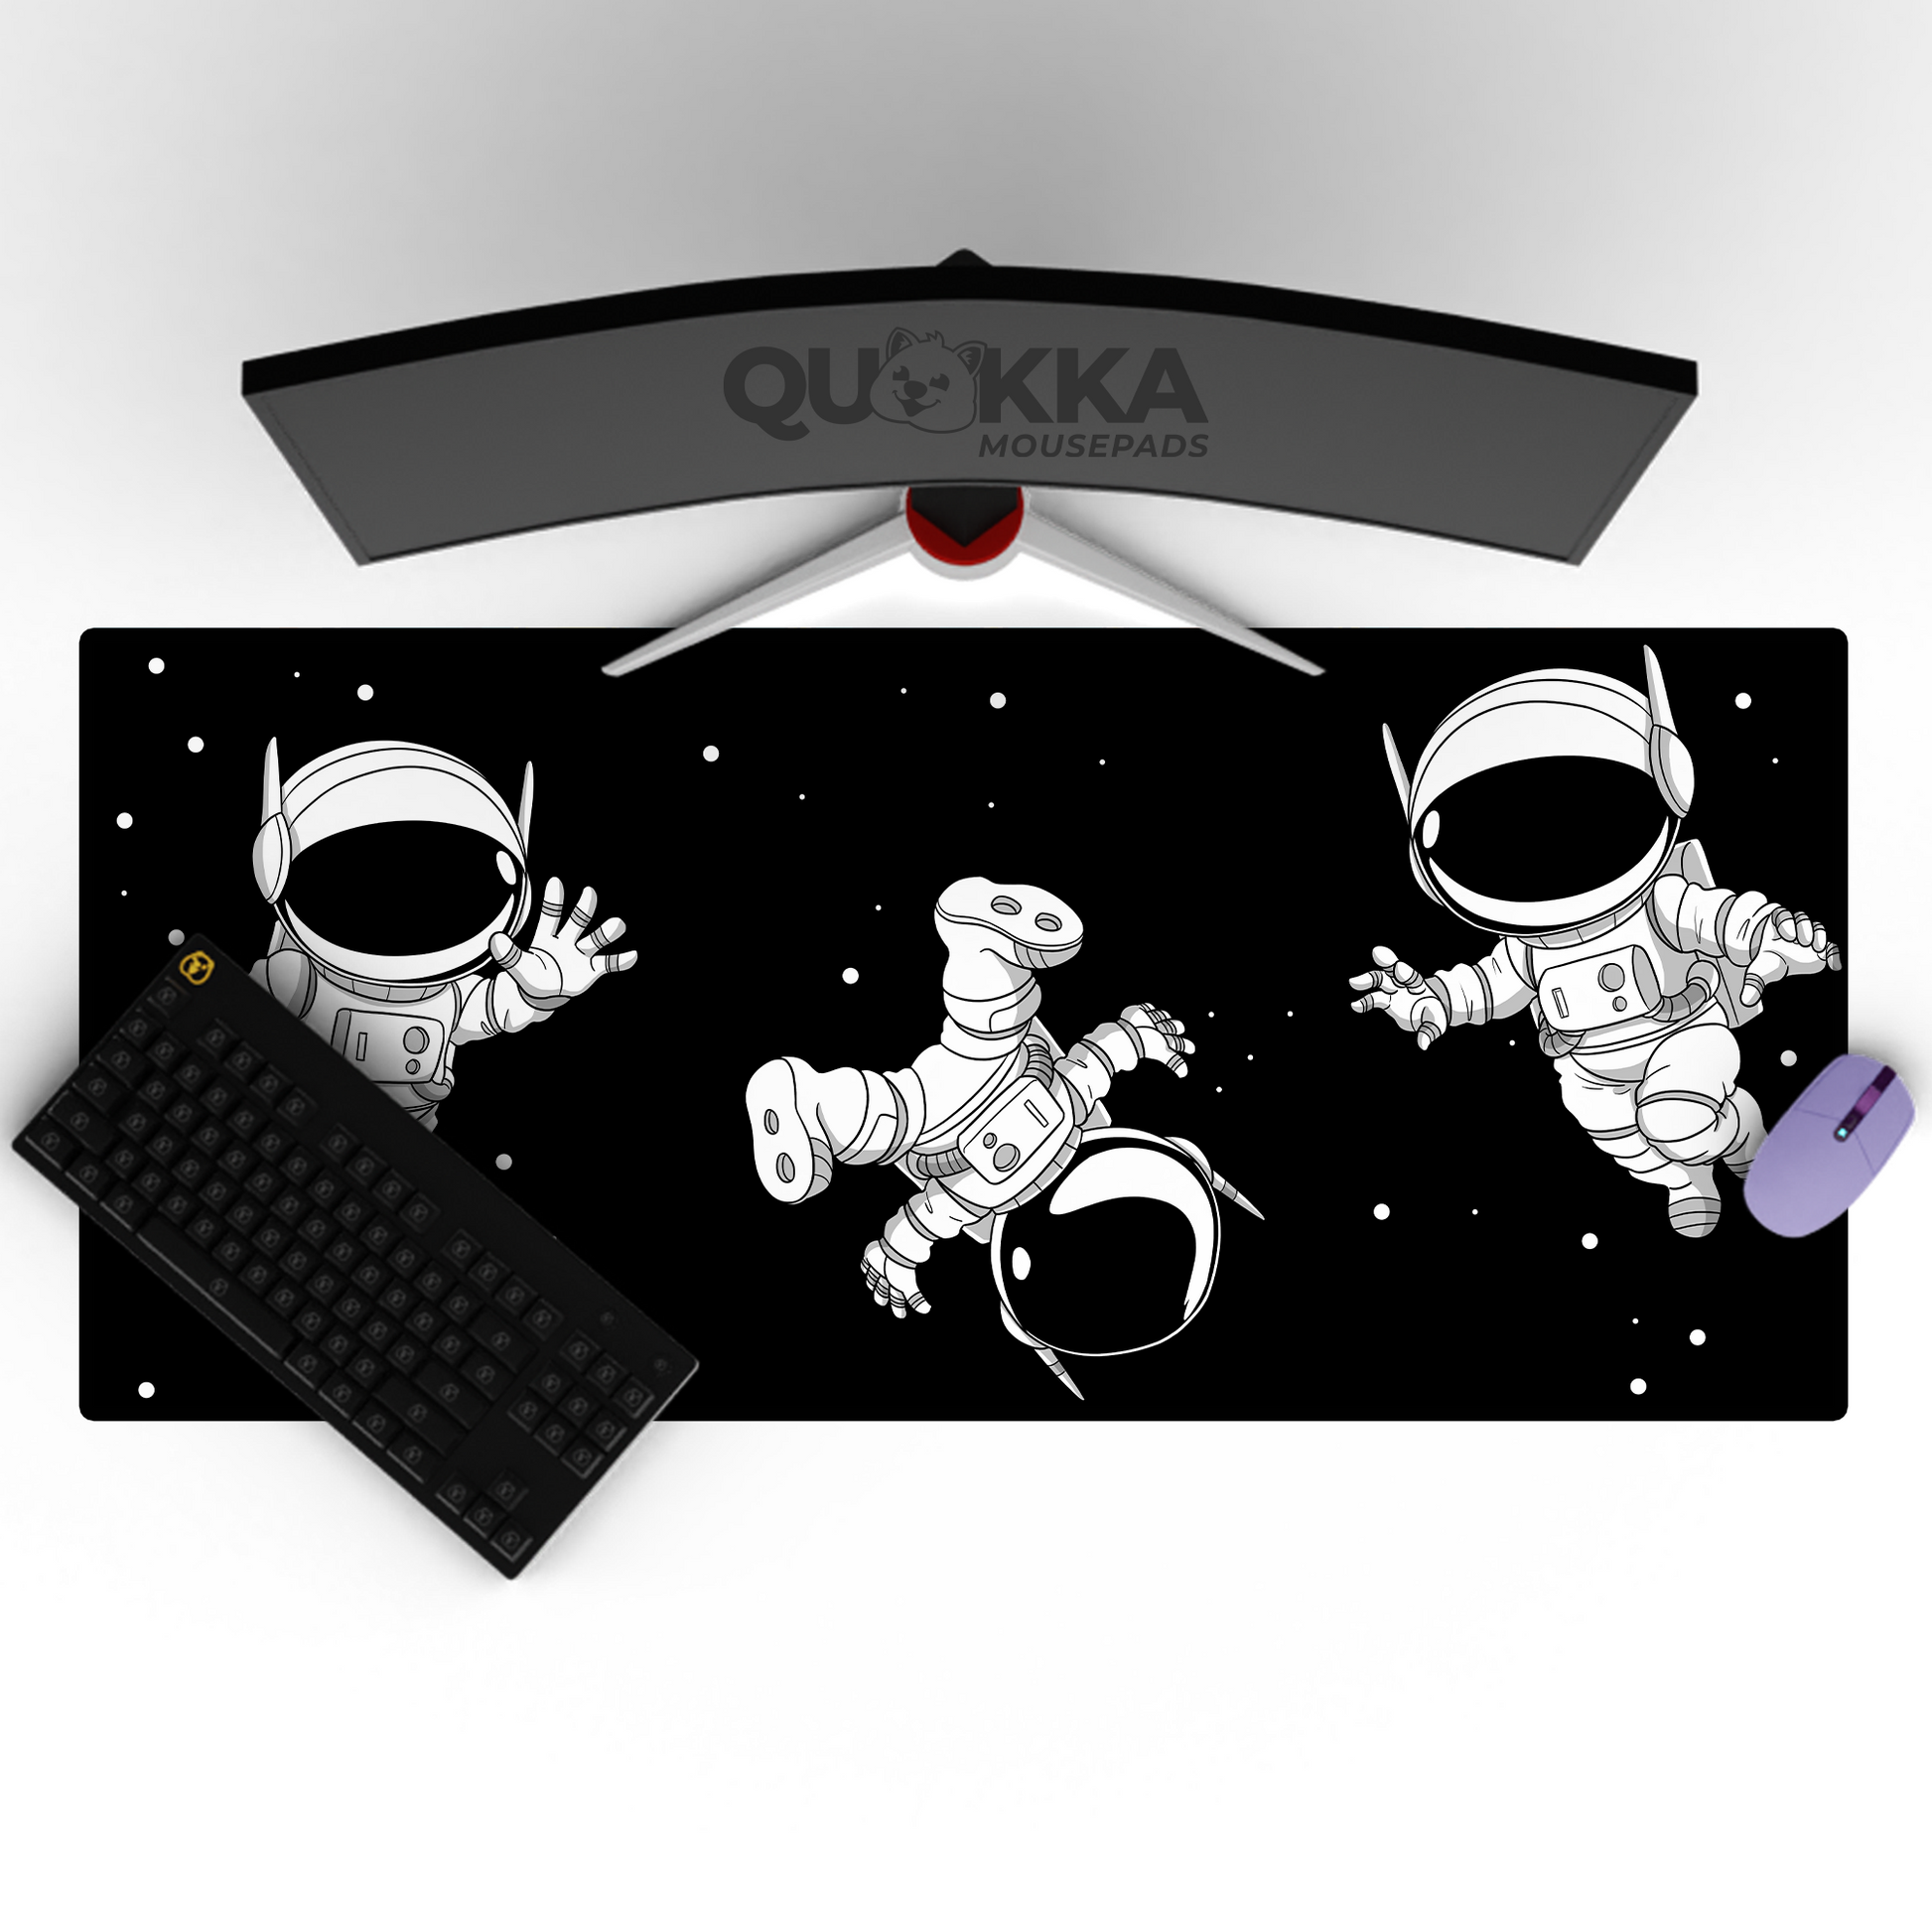 reMarkable tablet - Astronaut Monkey Custom Screen – Einkpads